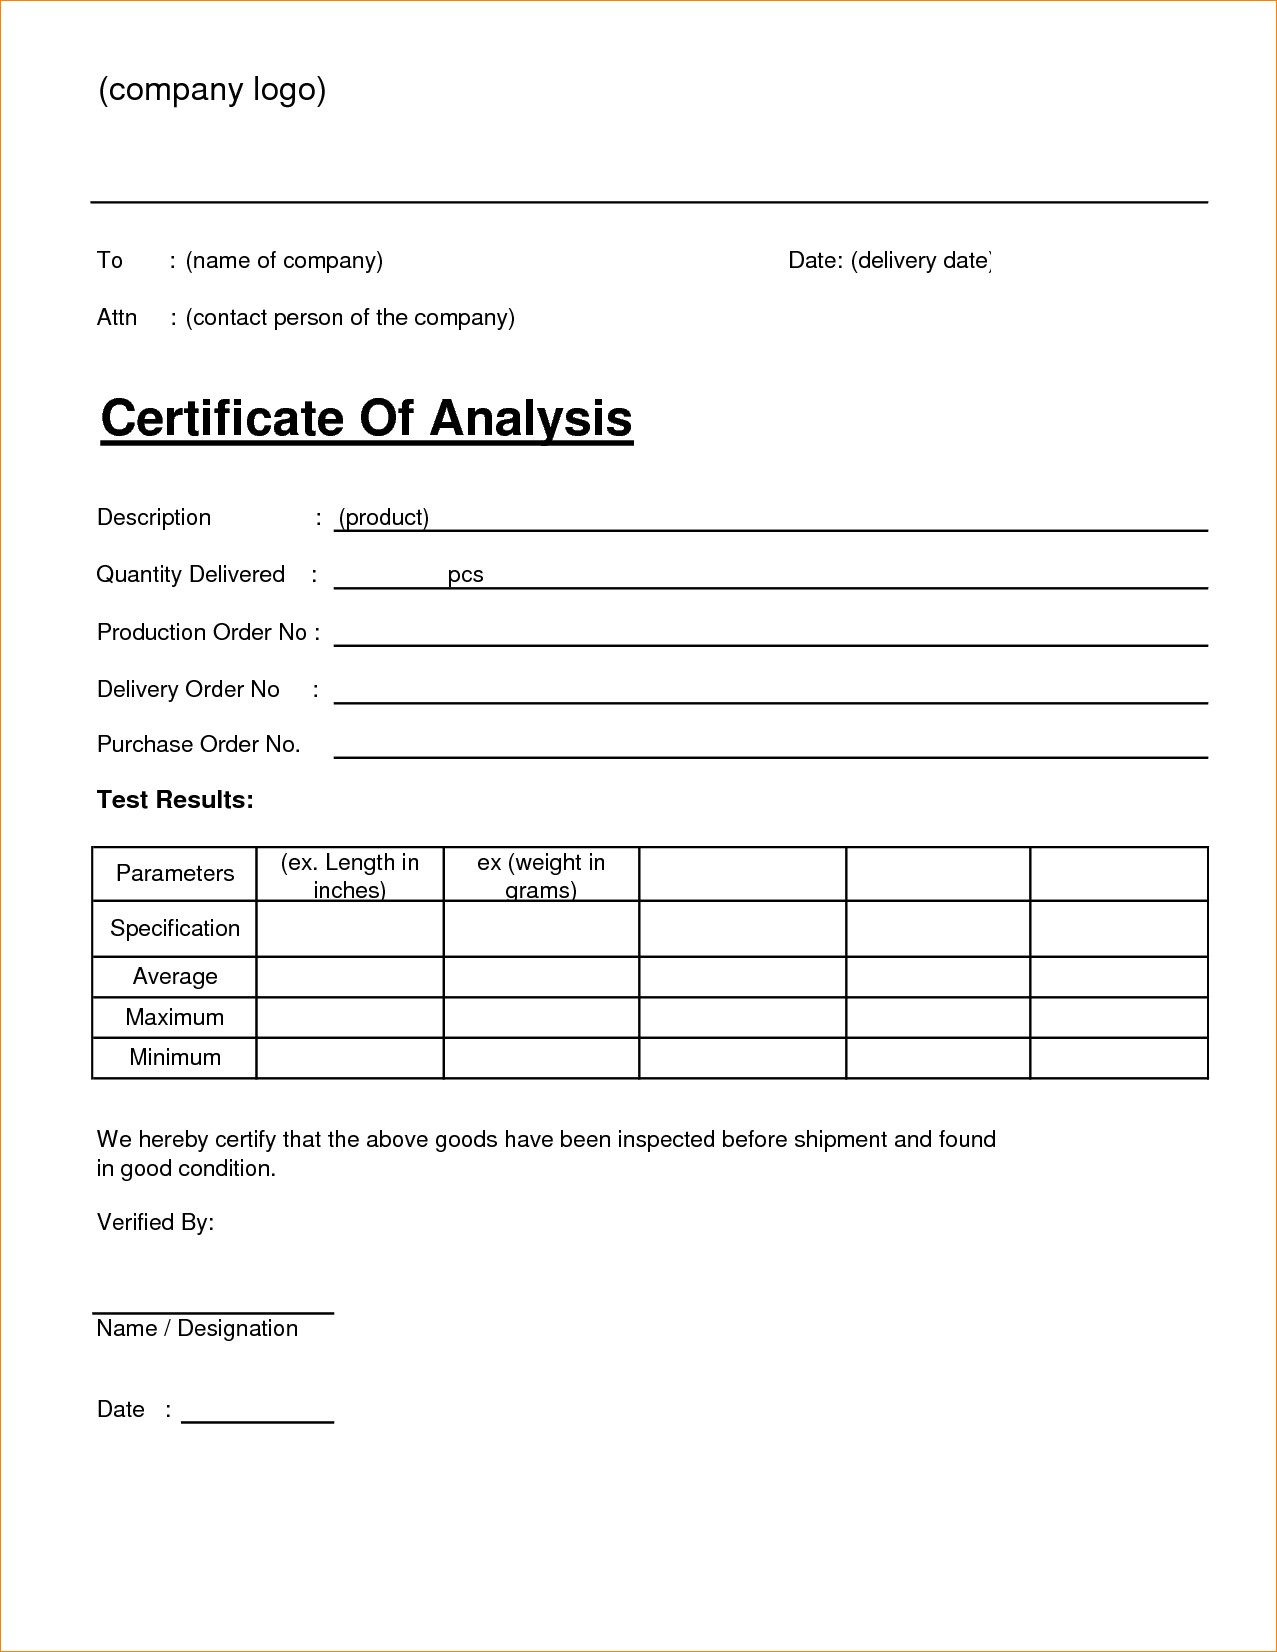 Certificate of Analysis TemplateÂ 